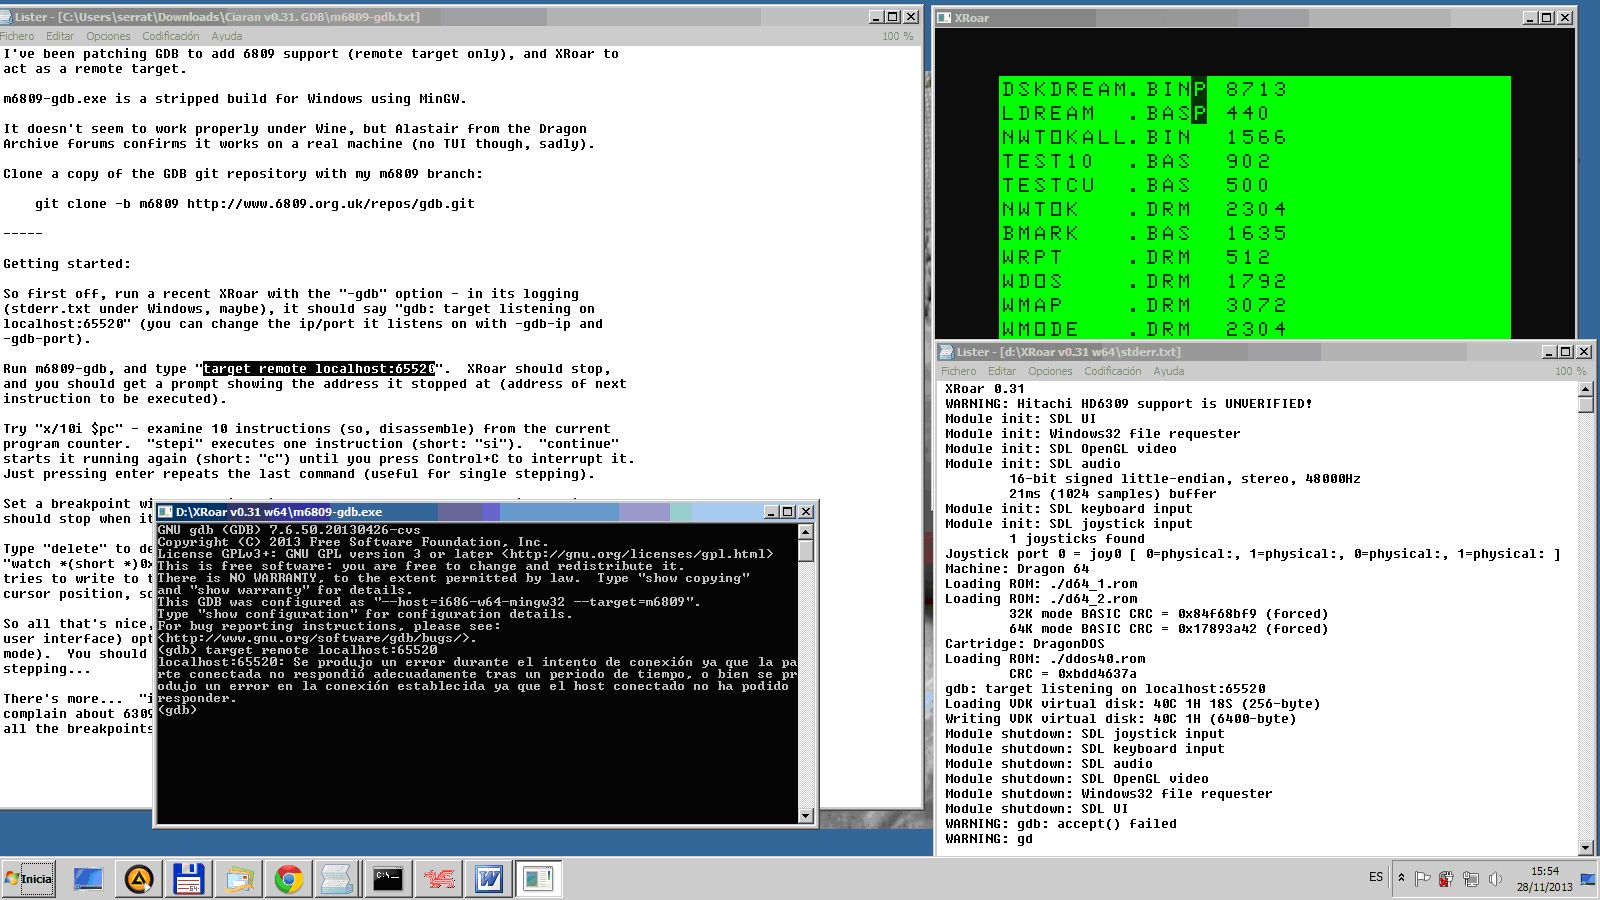 screen dump with xroar log and m6809-gdb error